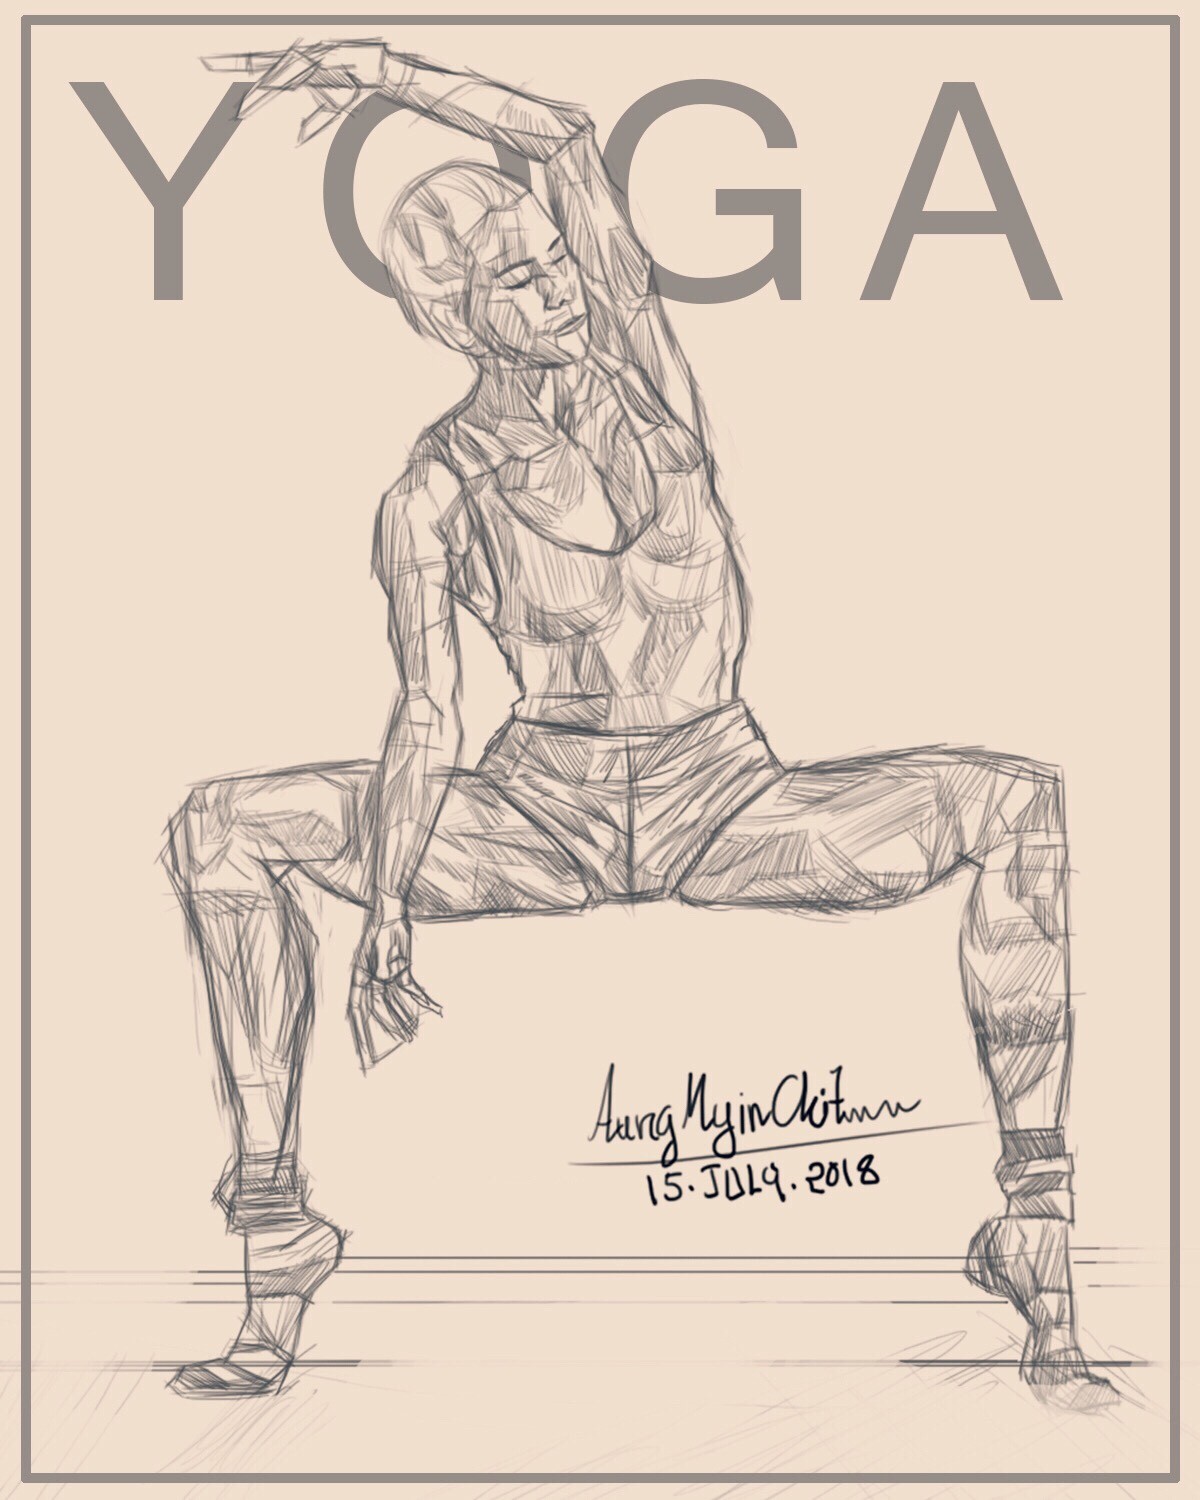 YoungWoman.Lord of the Dance Pose.Natarajasana | Yoga drawing, Yoga art,  Art drawings simple